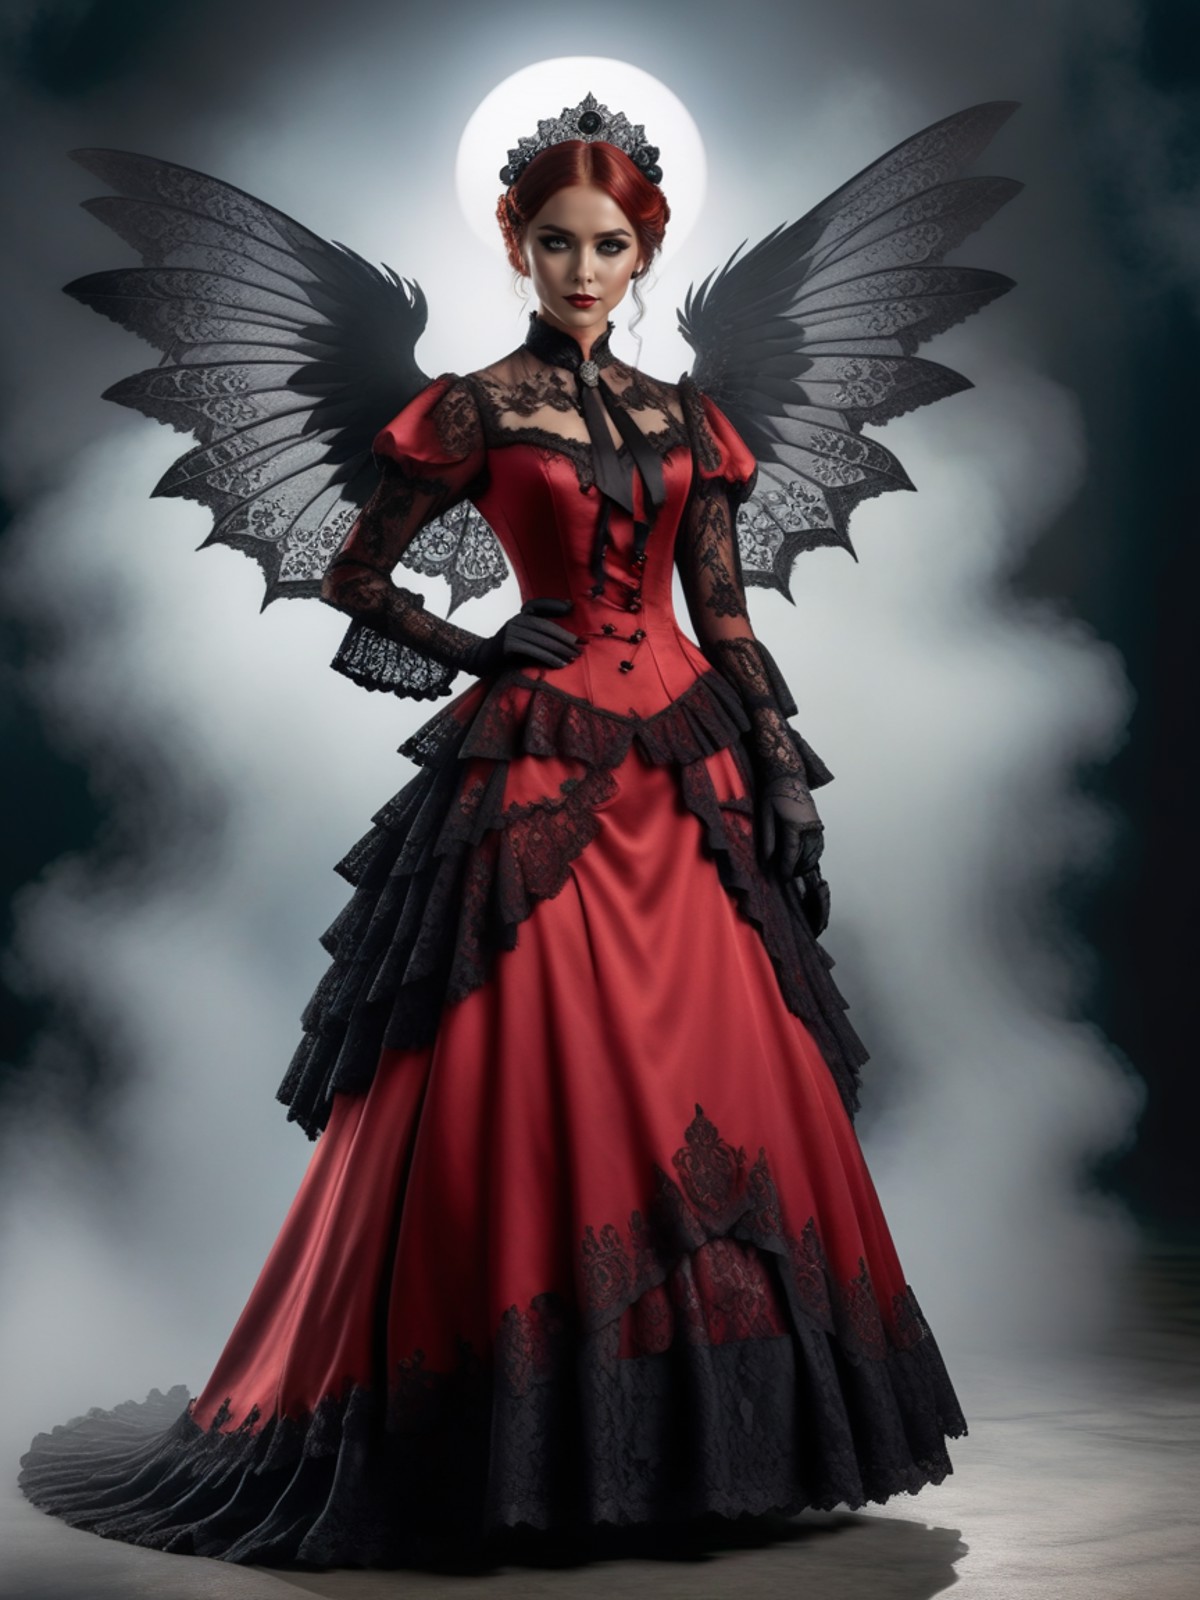 breathtaking woman wearing a red (victorian dress), <lora:victorian_dress-XL-2.0:1>
photograph, realistic, black wings, fu...